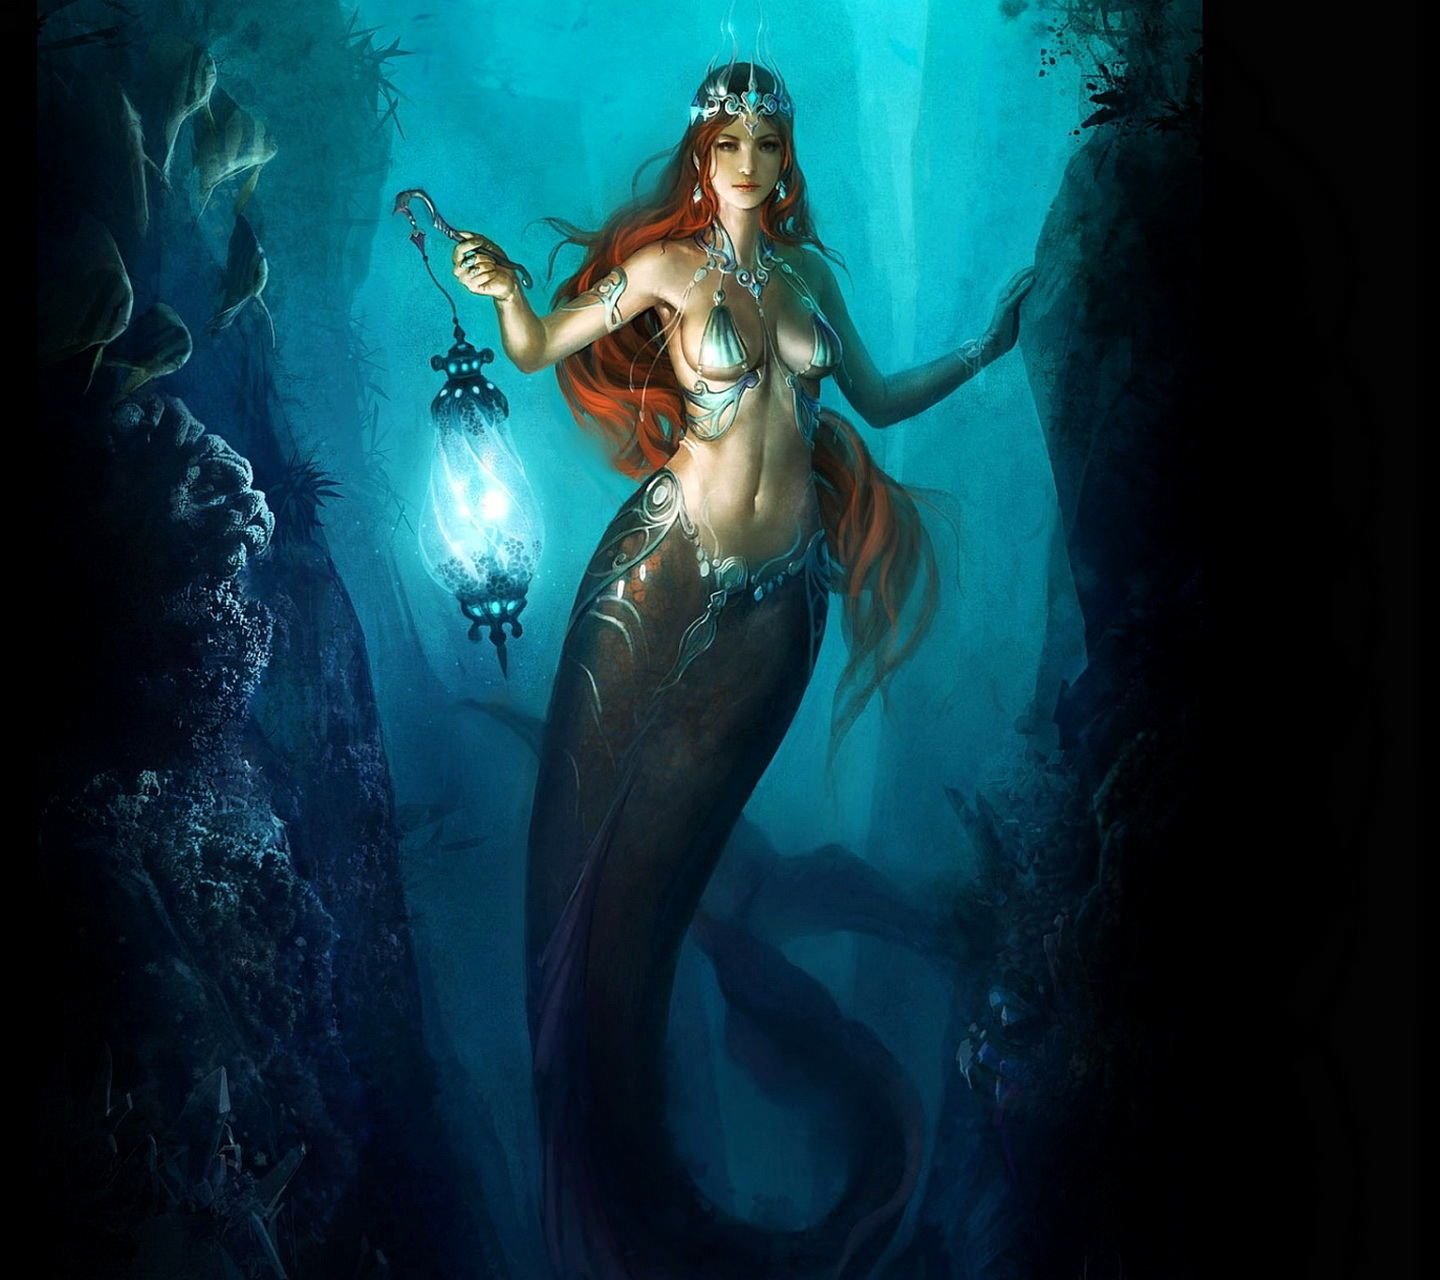 FREE Mermaid Wallpaper in PSD